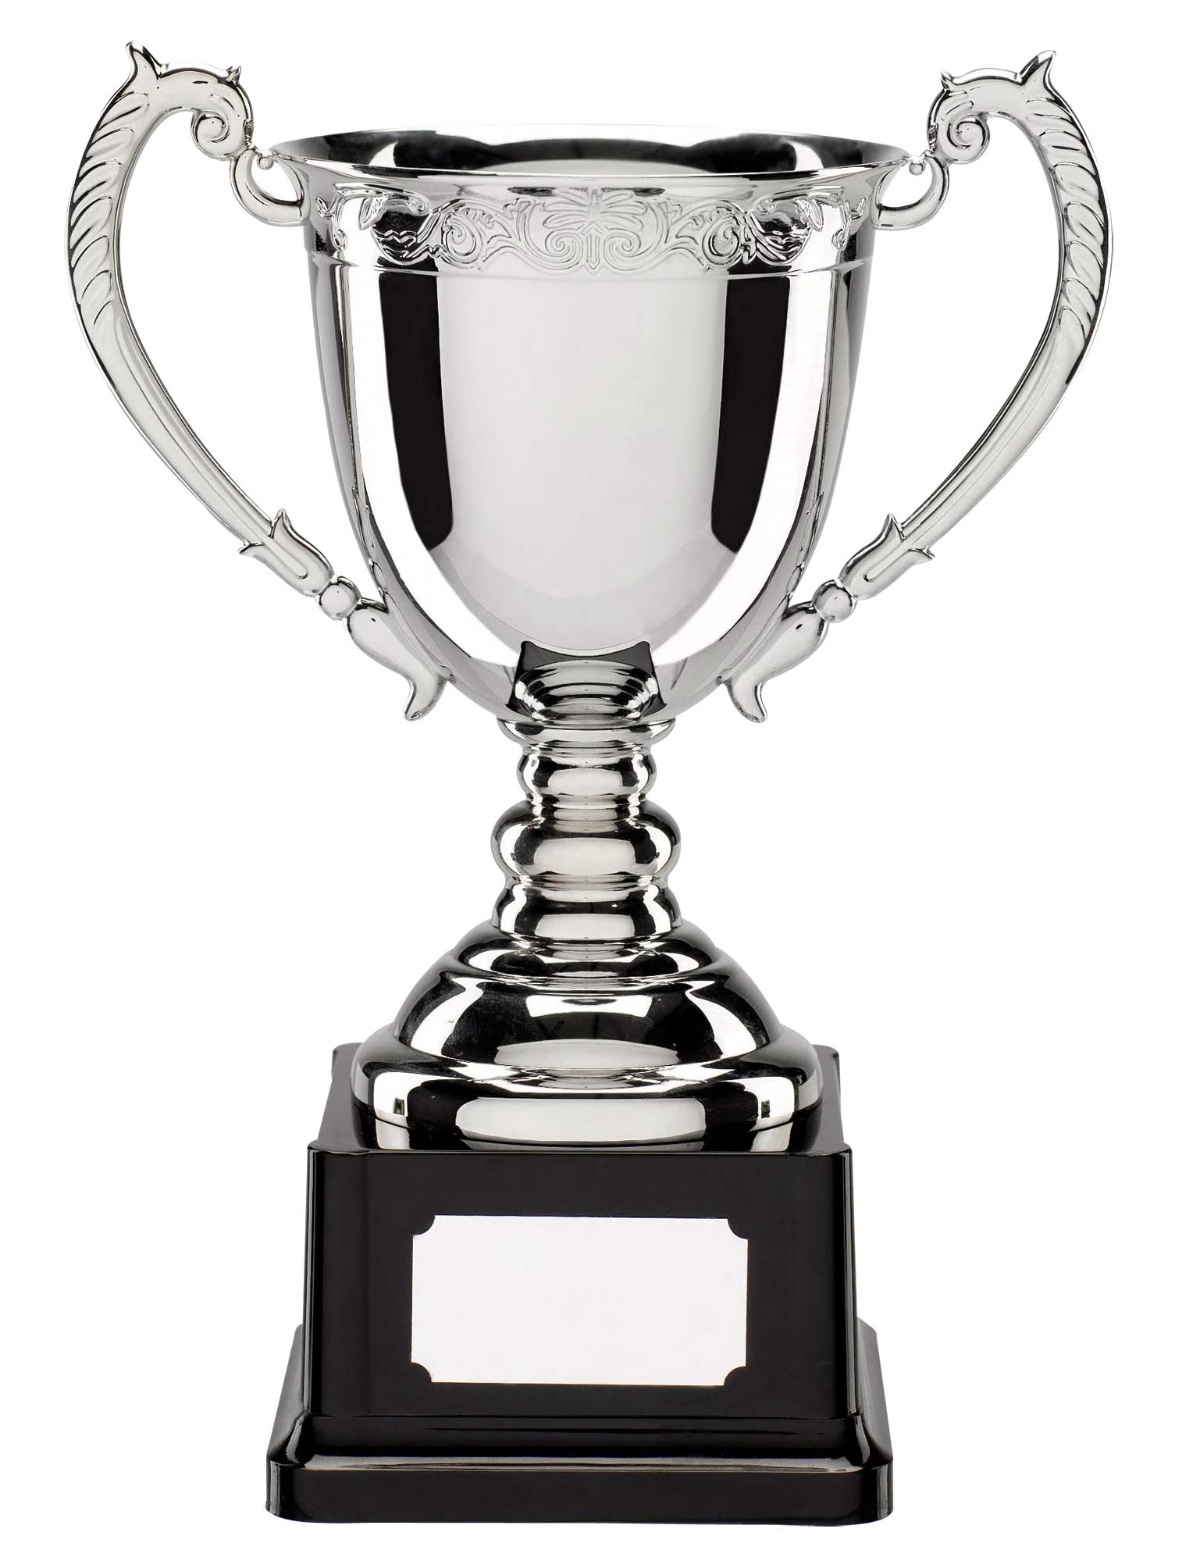 quality-silver-metal-trophy-cup-cc4--4123-p.jpg